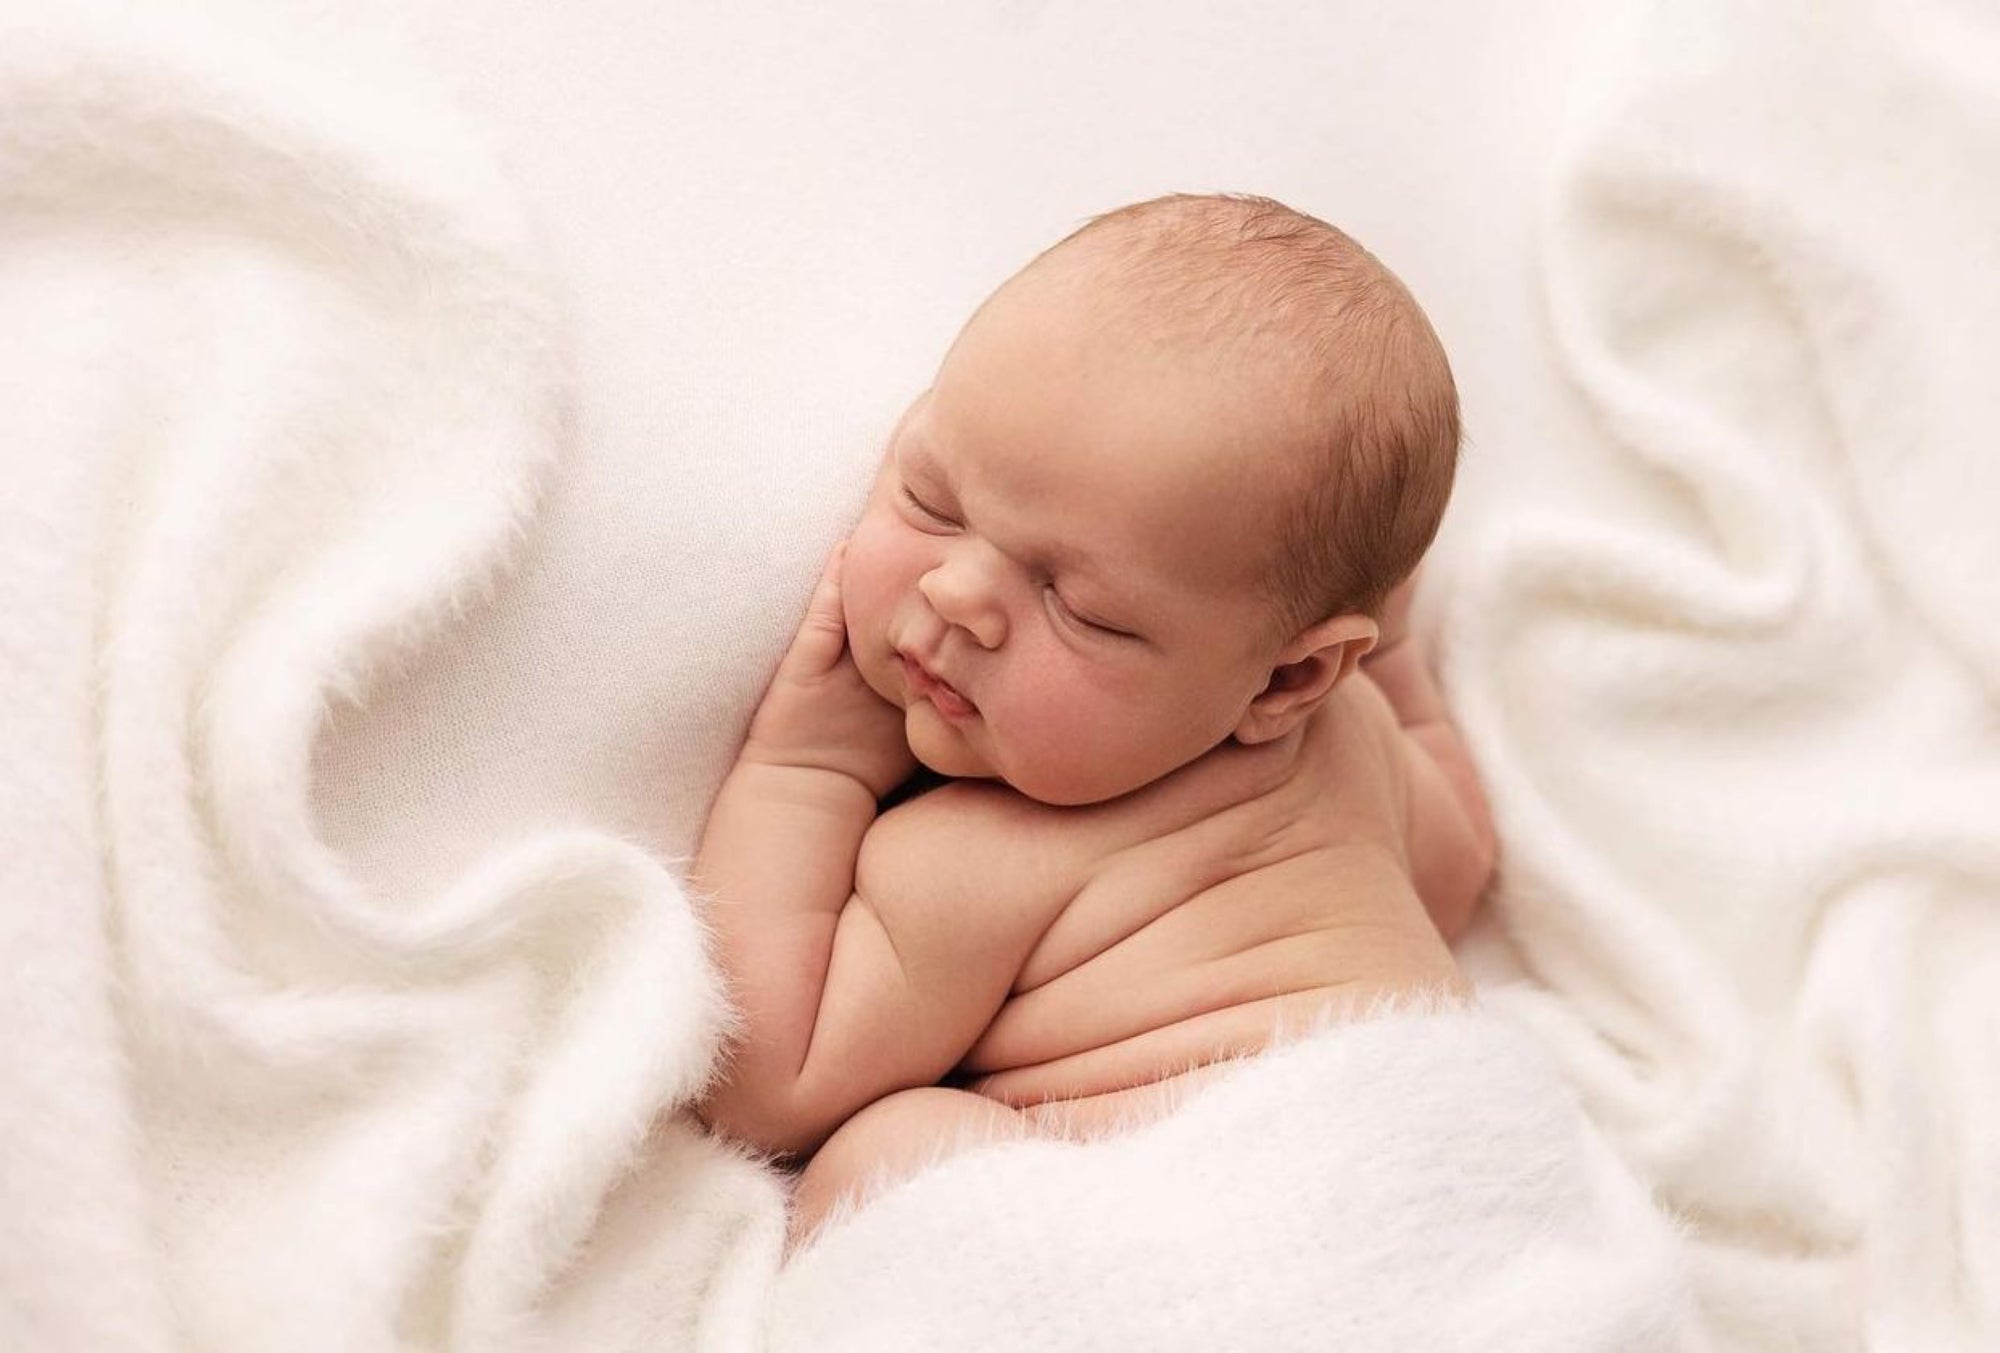 Ultimate Cashmere Drops - Newborn Photography Props - Princess & the Pea Props